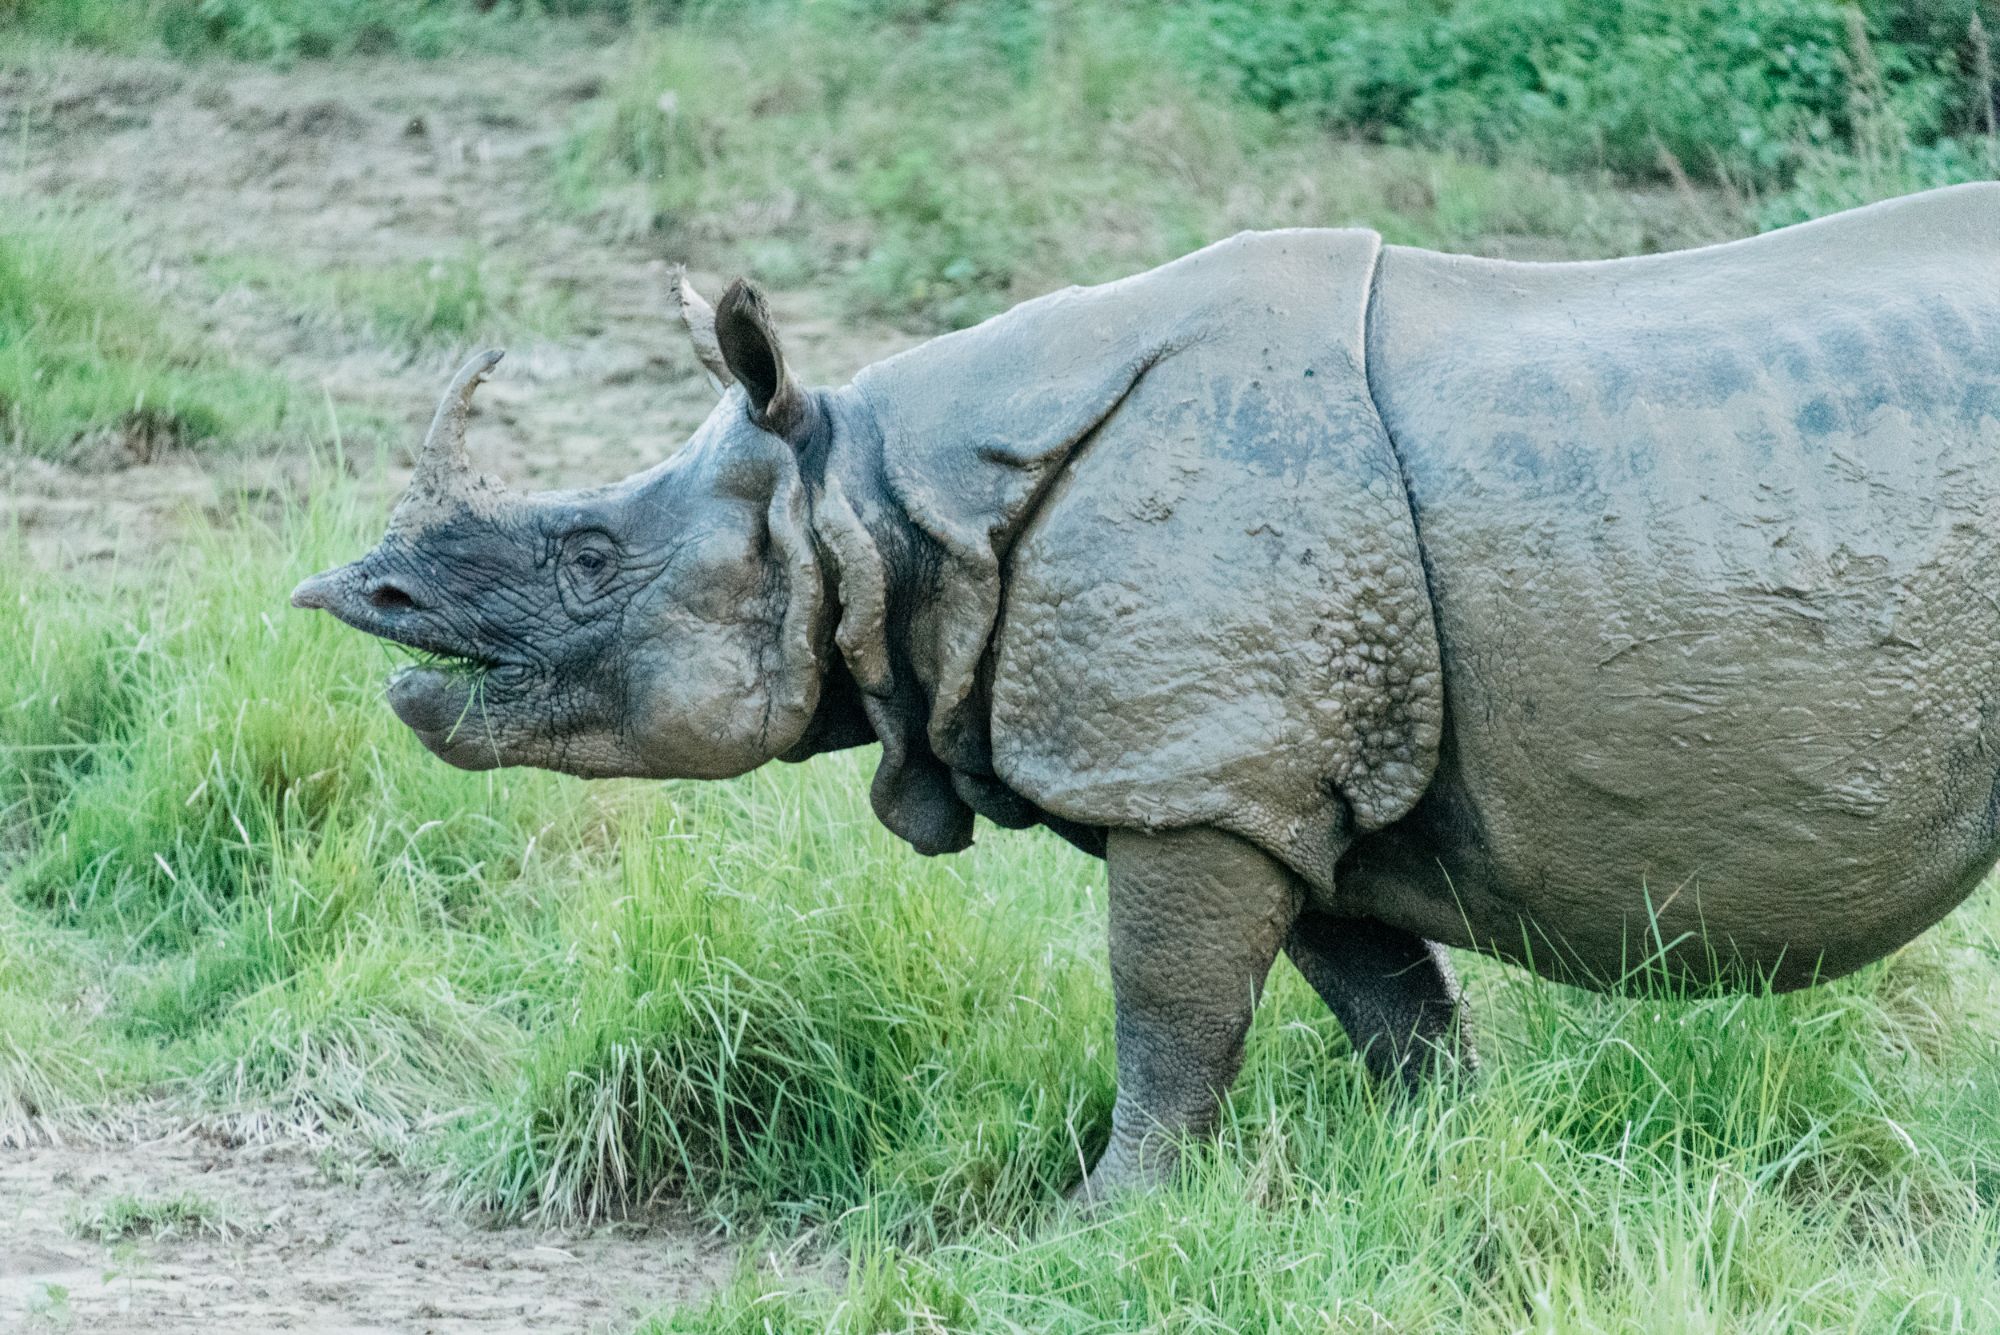 Rhino in the grass